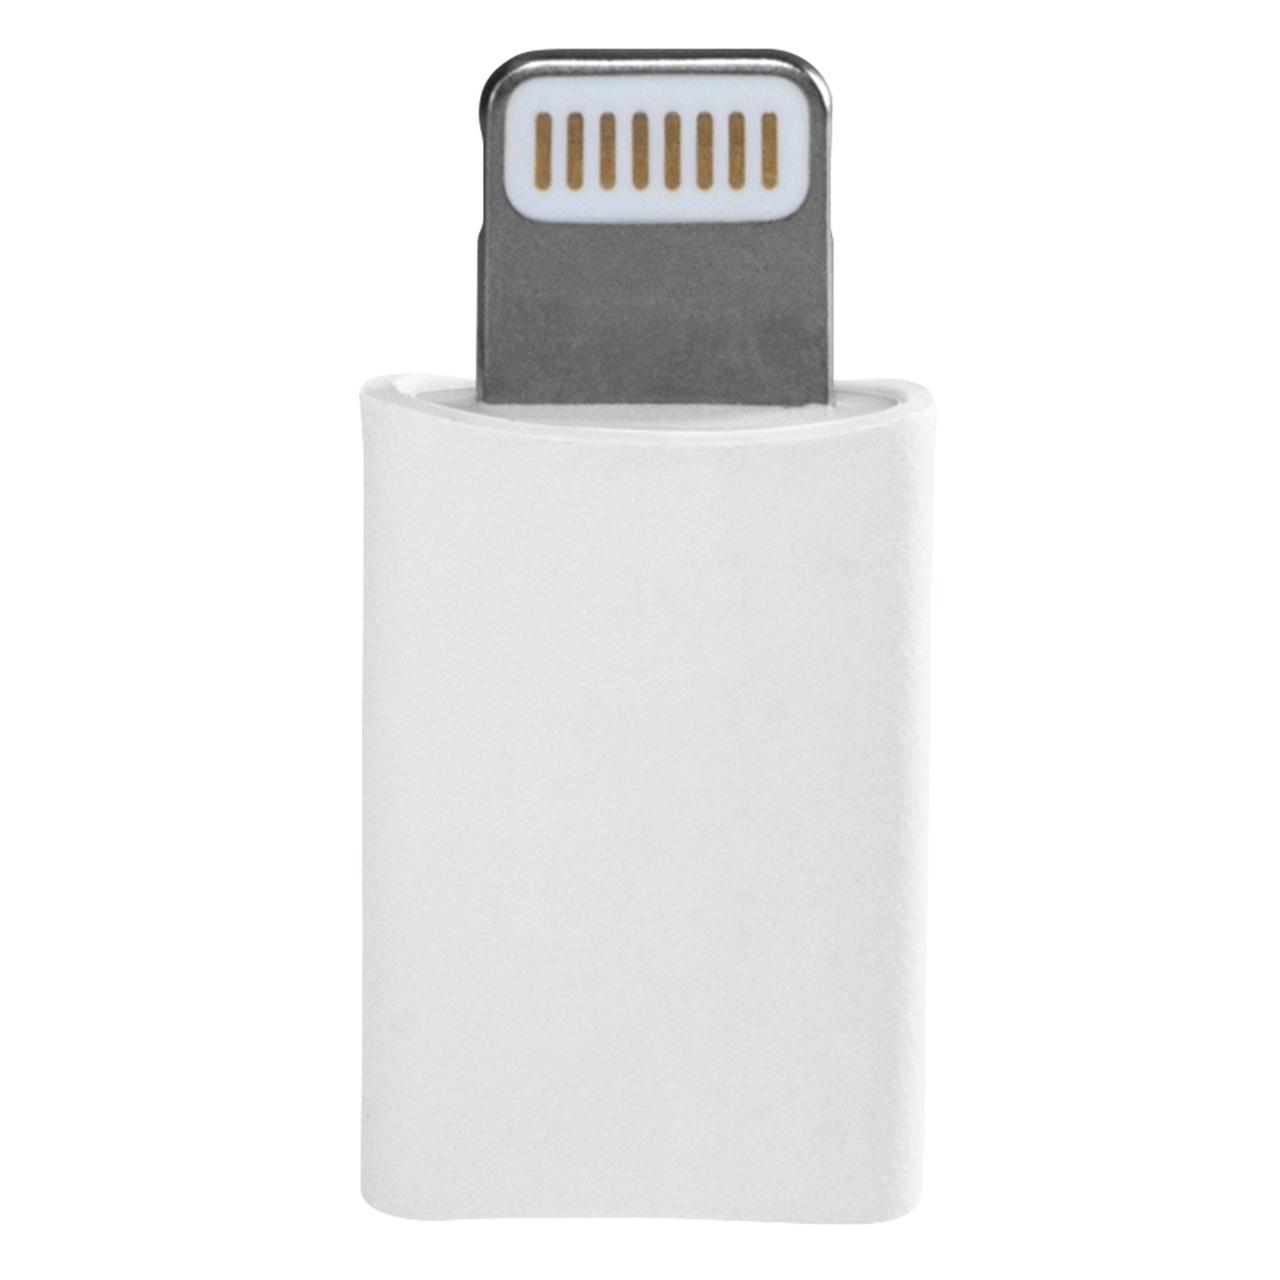 iPhone Adapter Lightning zu Micro USB weiß